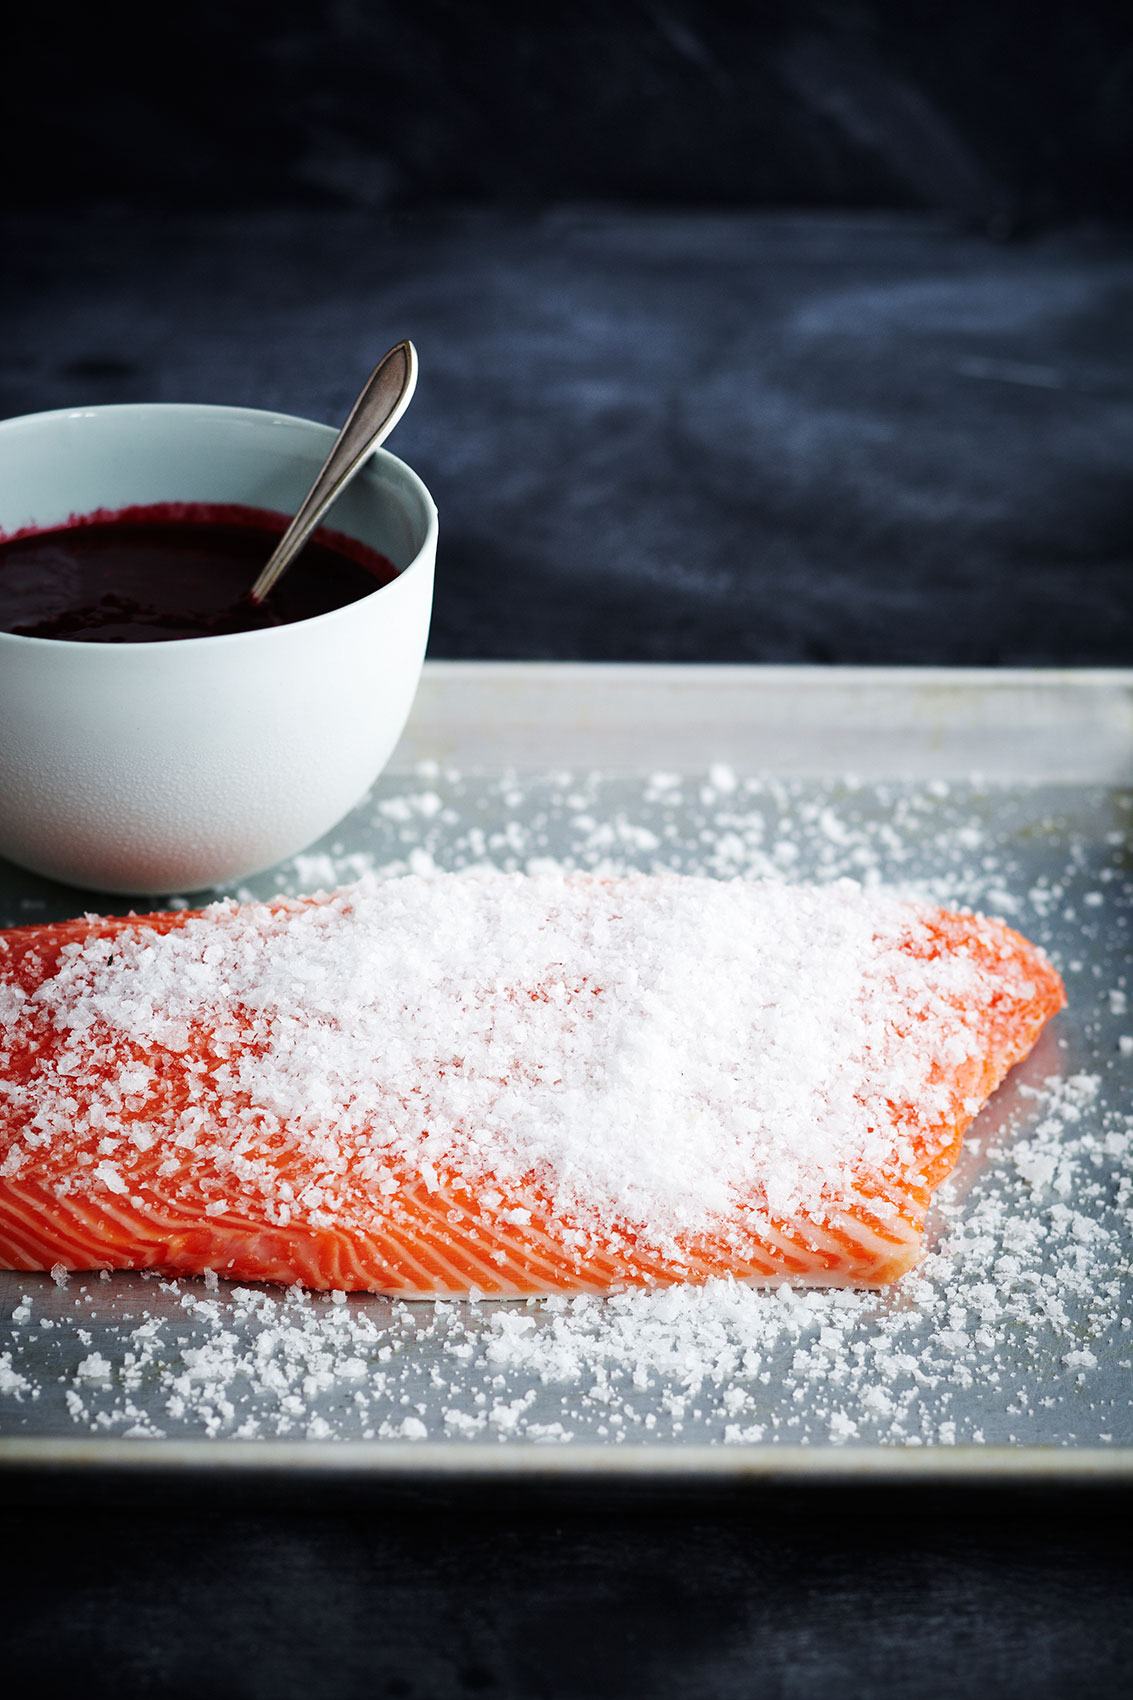 Laesoe Salt • Salting Salmon for Boysenberry Gravlax • Advertising & Lifestyle Food Photography